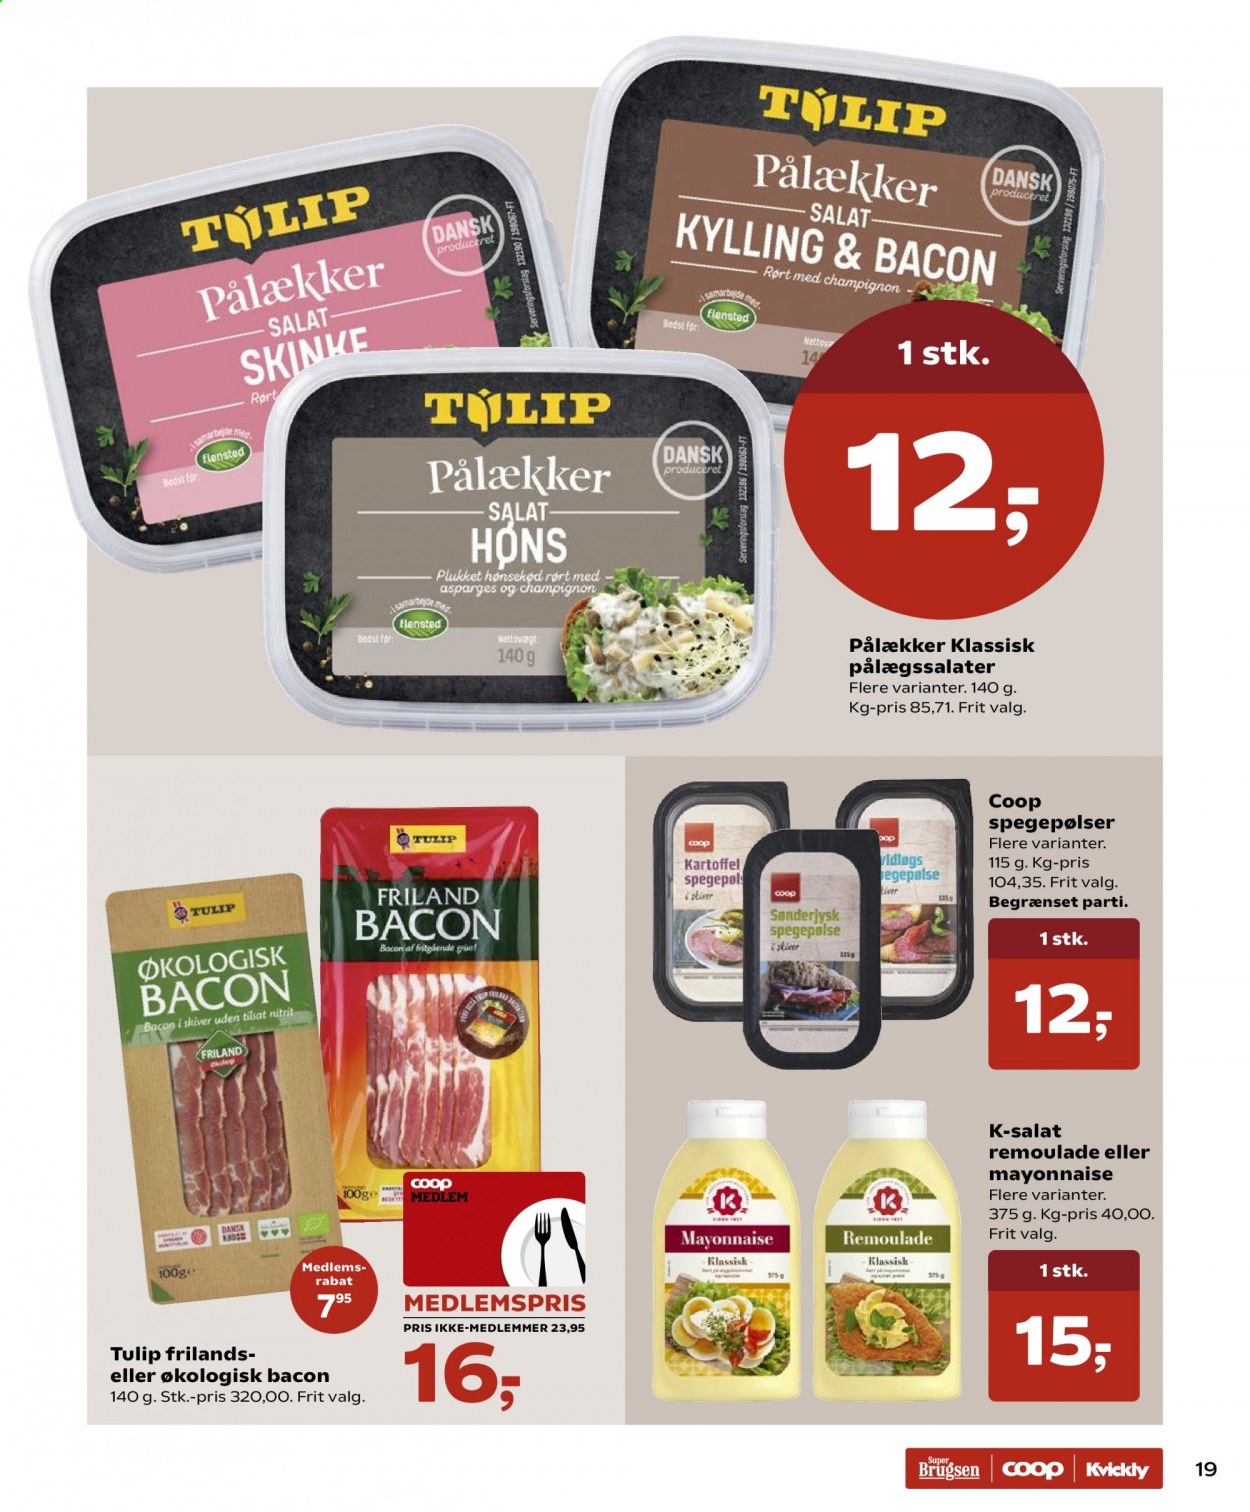 thumbnail - Kvickly tilbud  - 15.1.2021 - 21.1.2021 - tilbudsprodukter - asparges, champignon, kylling, salat, bacon, mayonnaise, remoulade. Side 19.